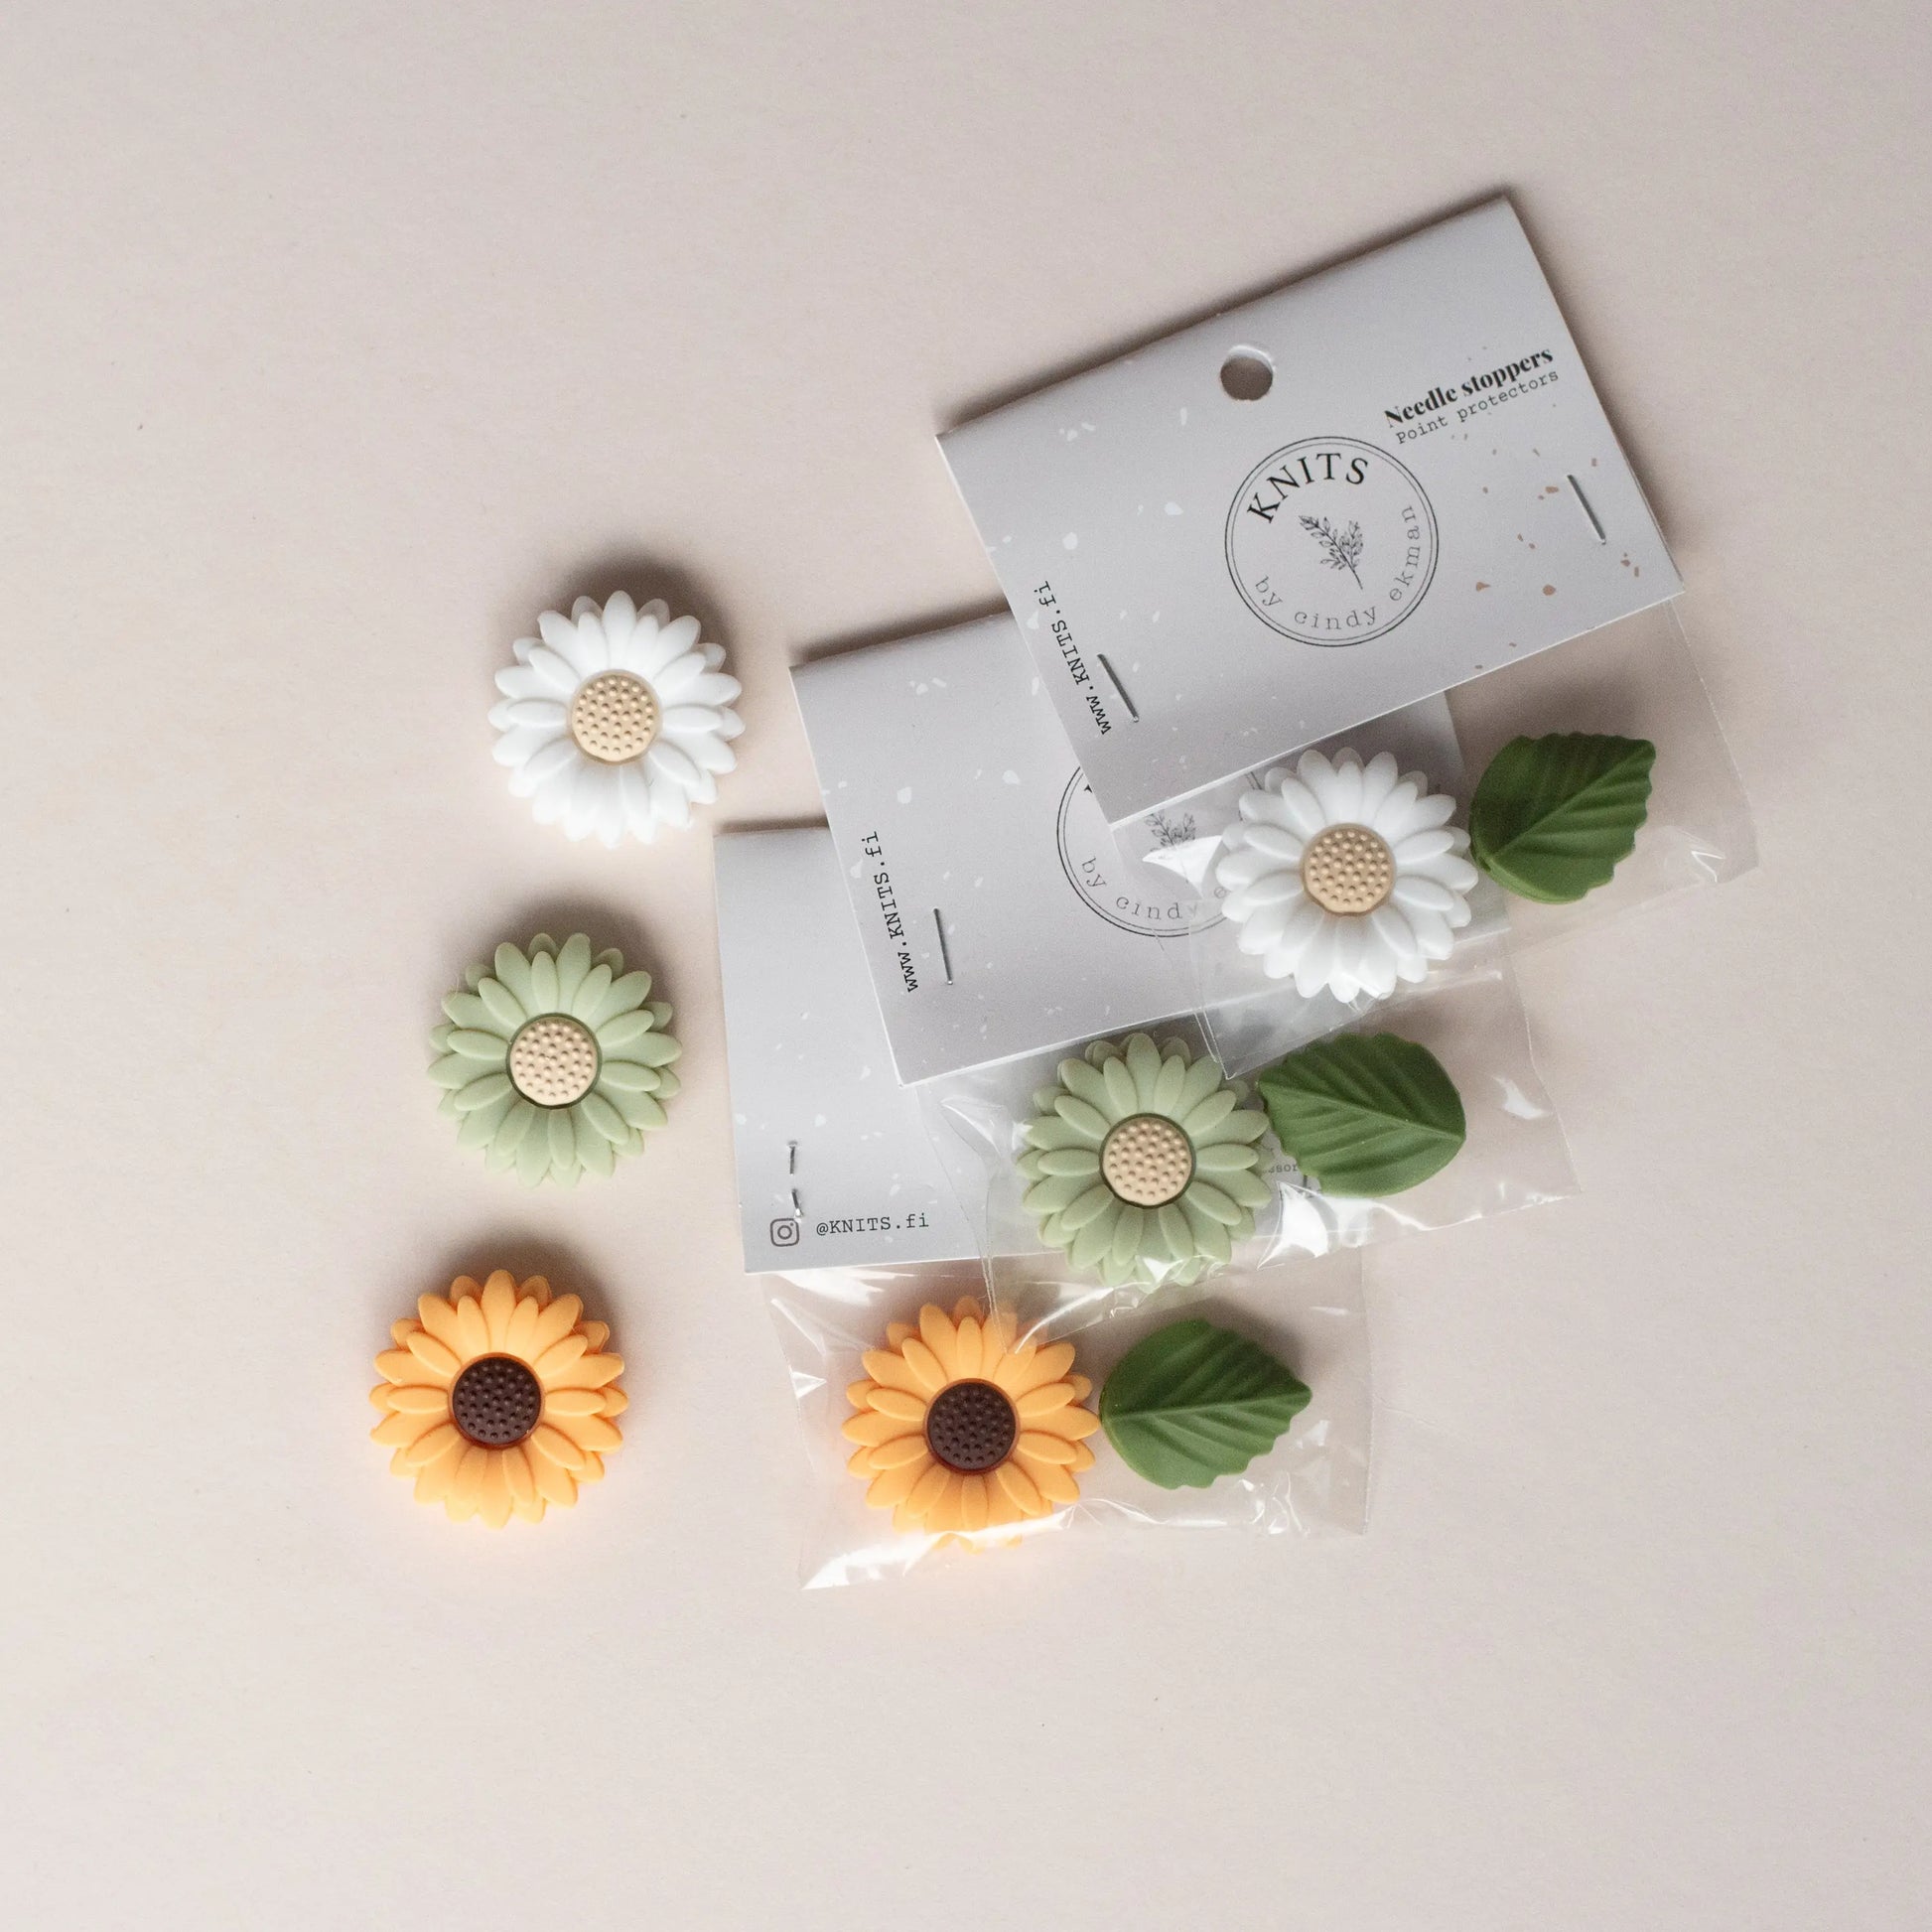 Needle stopper - Sunflower set KNITS by cindy ekman